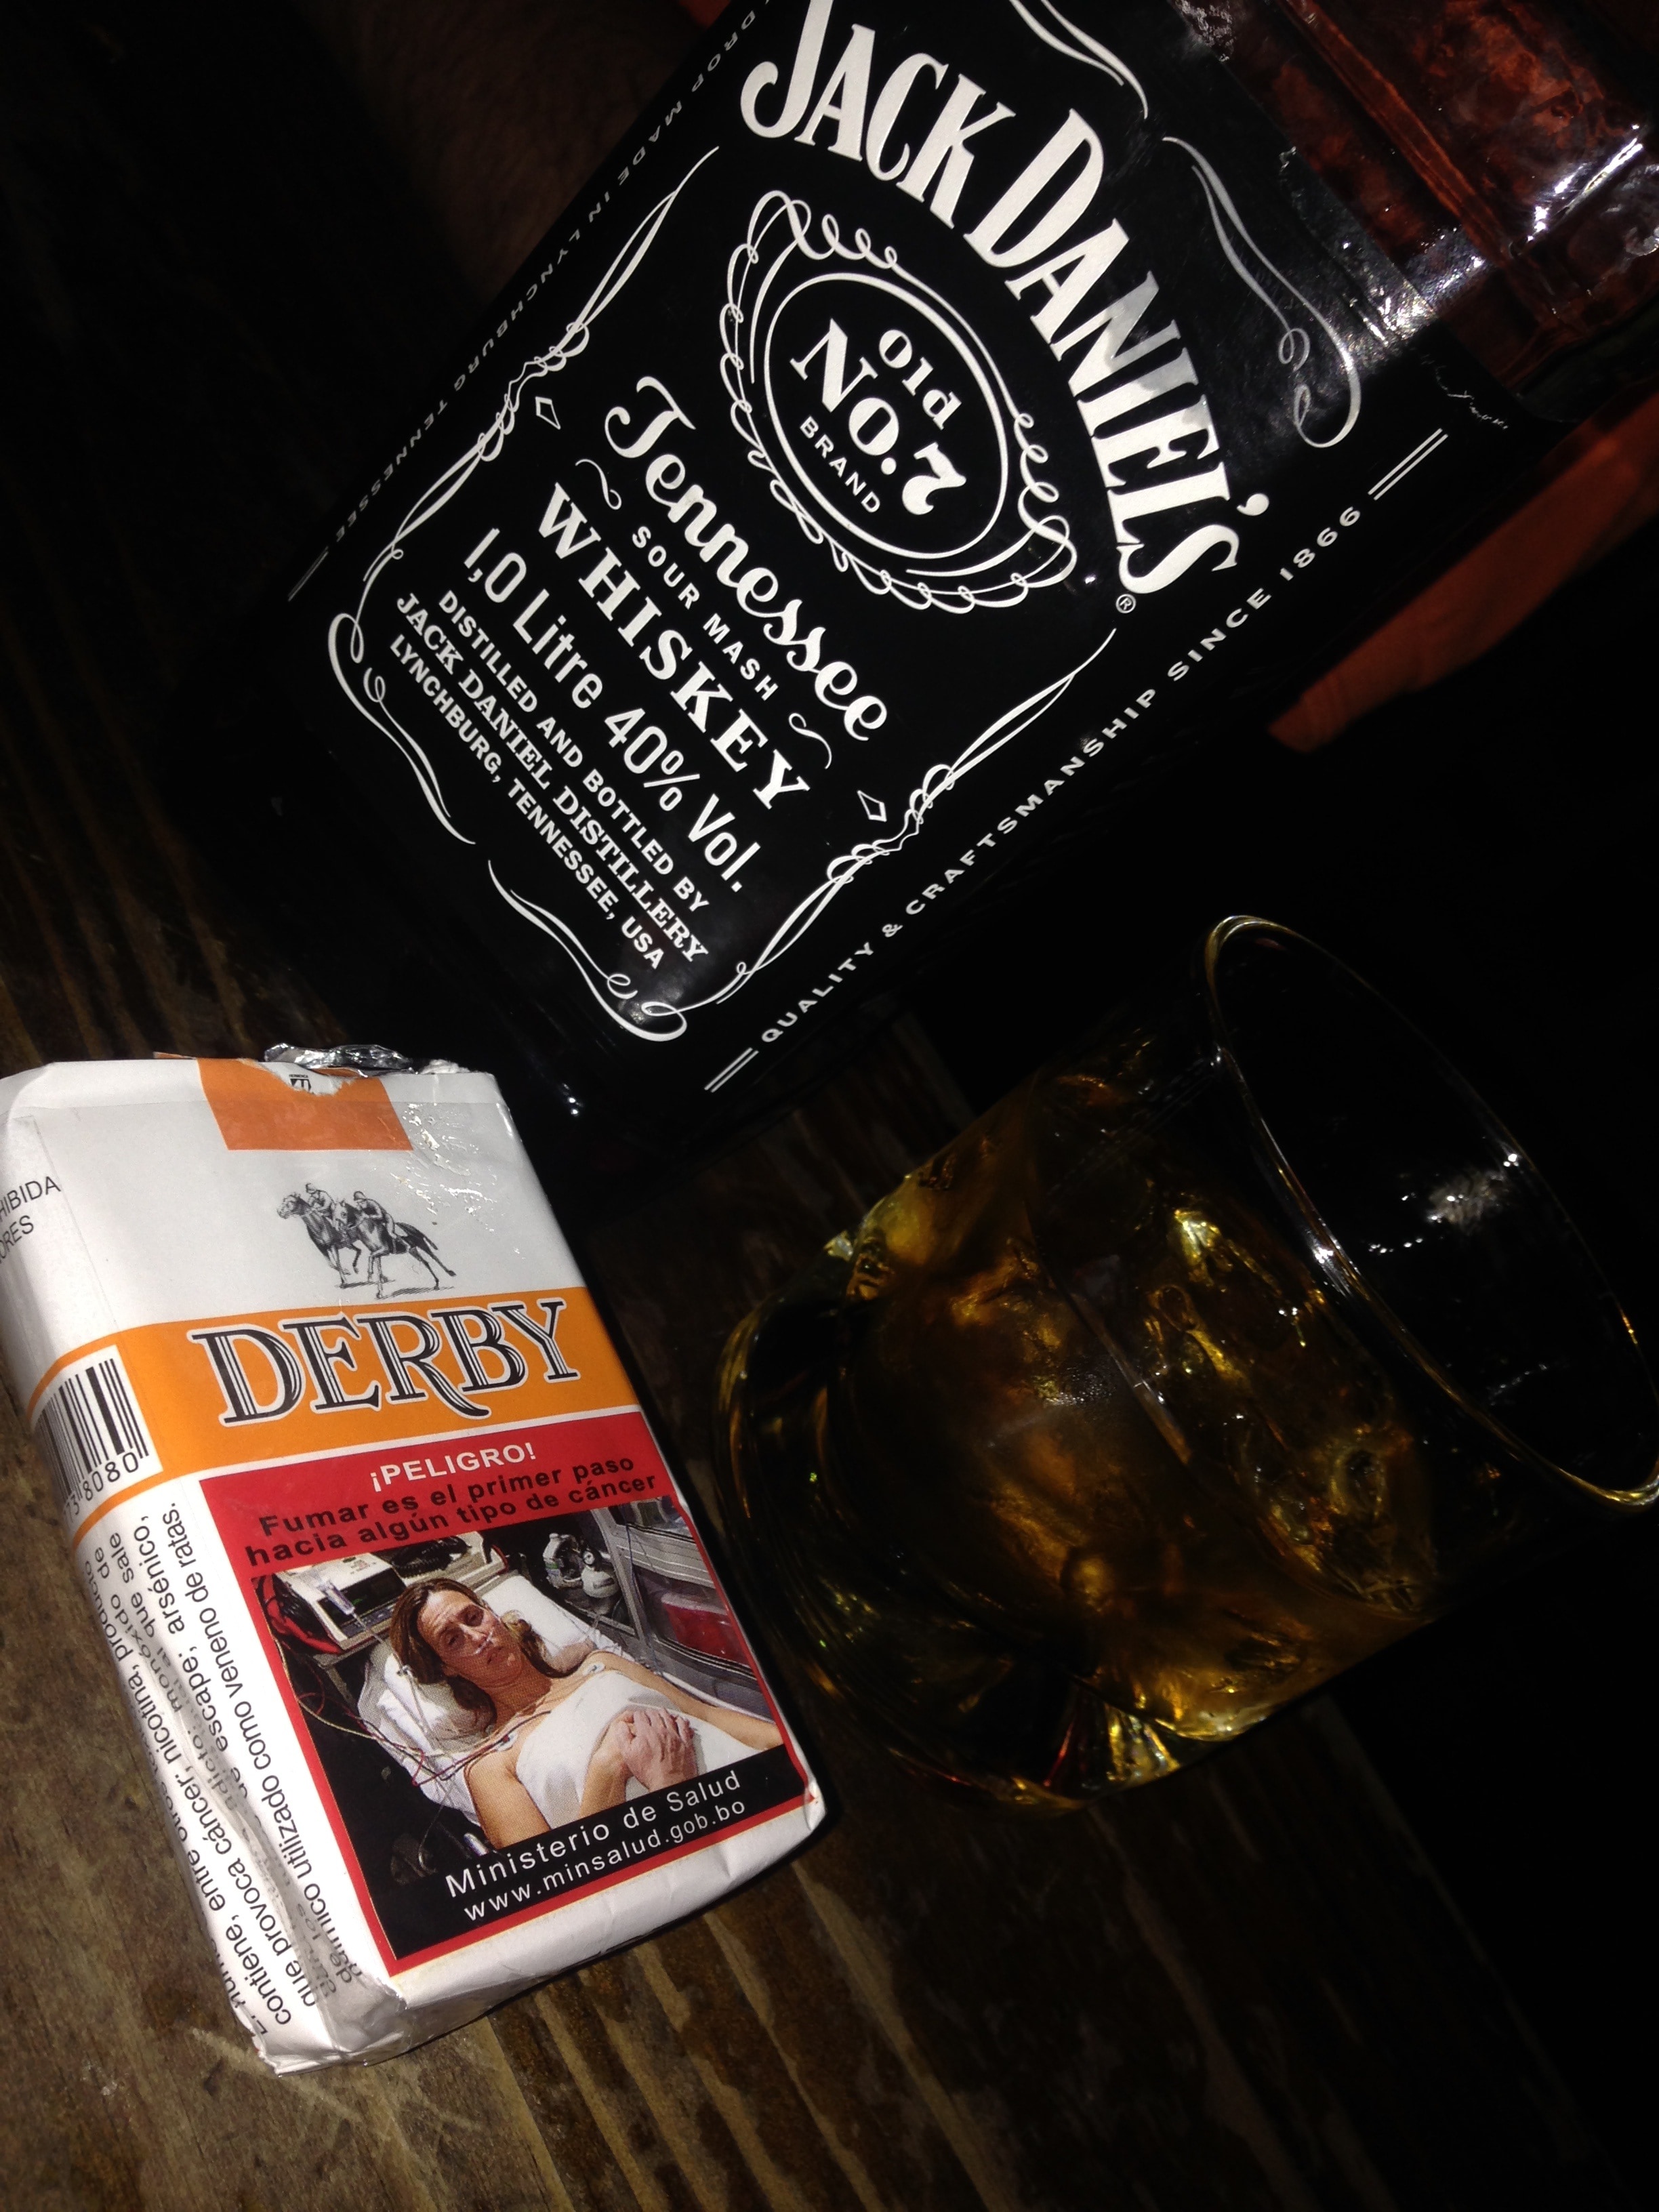 jack daniel's whiskey